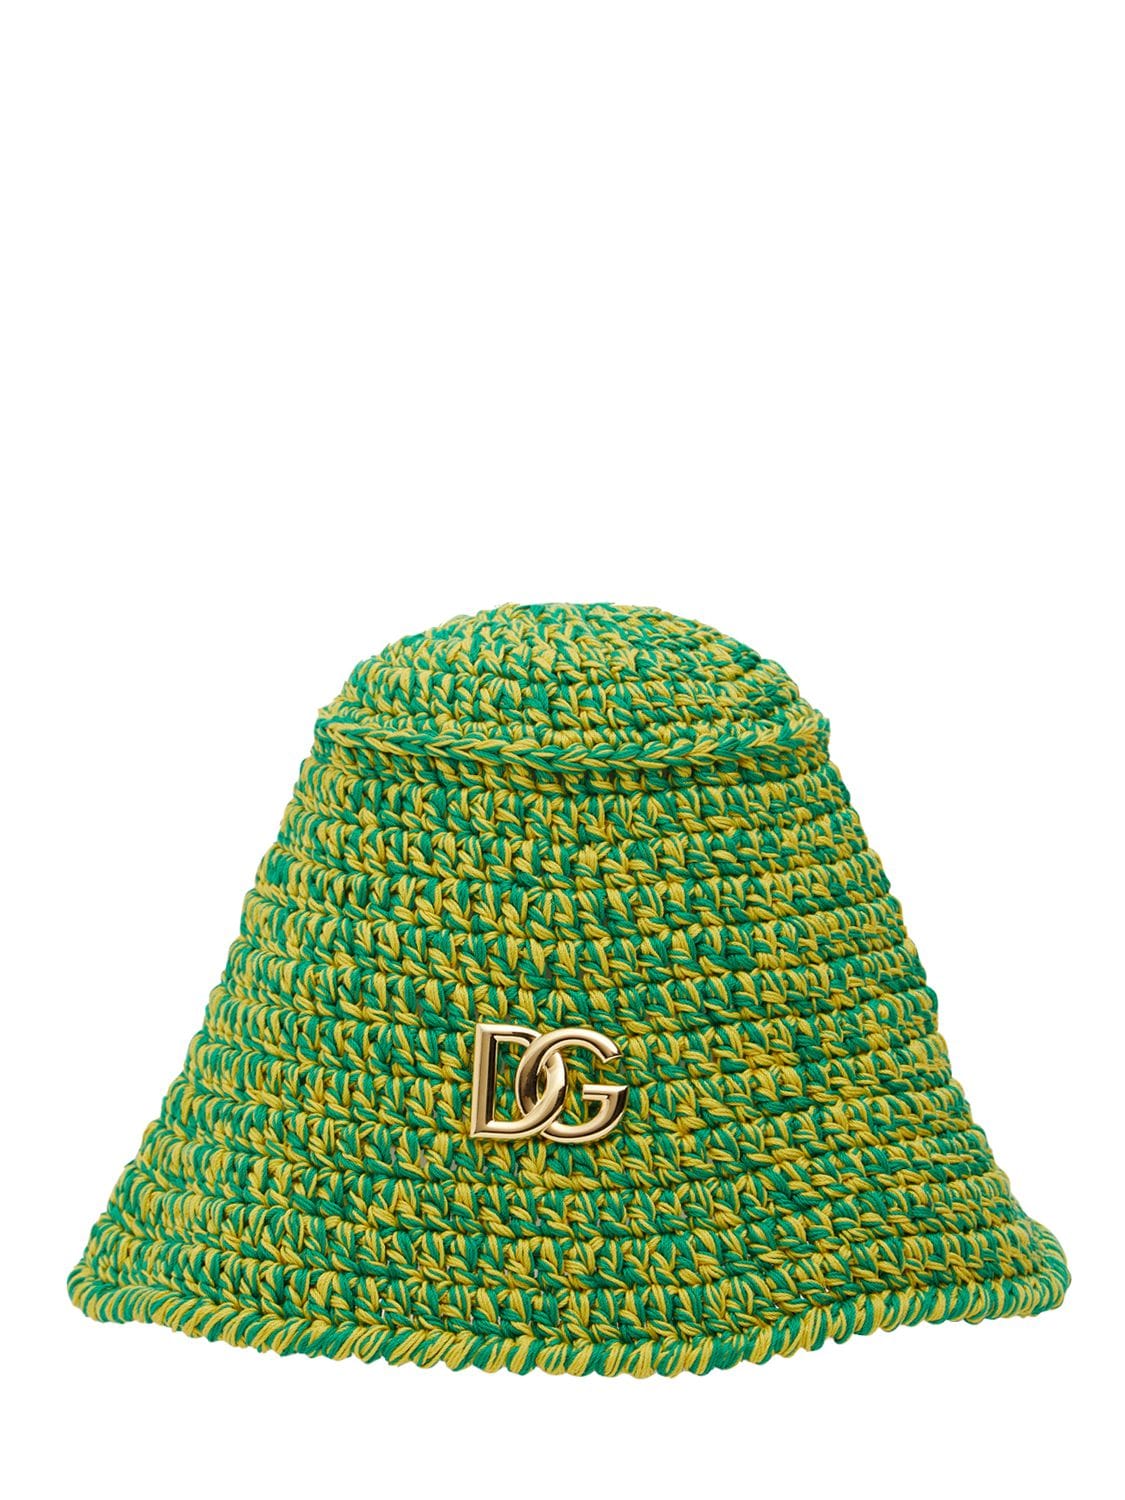 Dg Logo Cotton Knit Bucket Hat Luisaviaroma Women Accessories Headwear Hats 